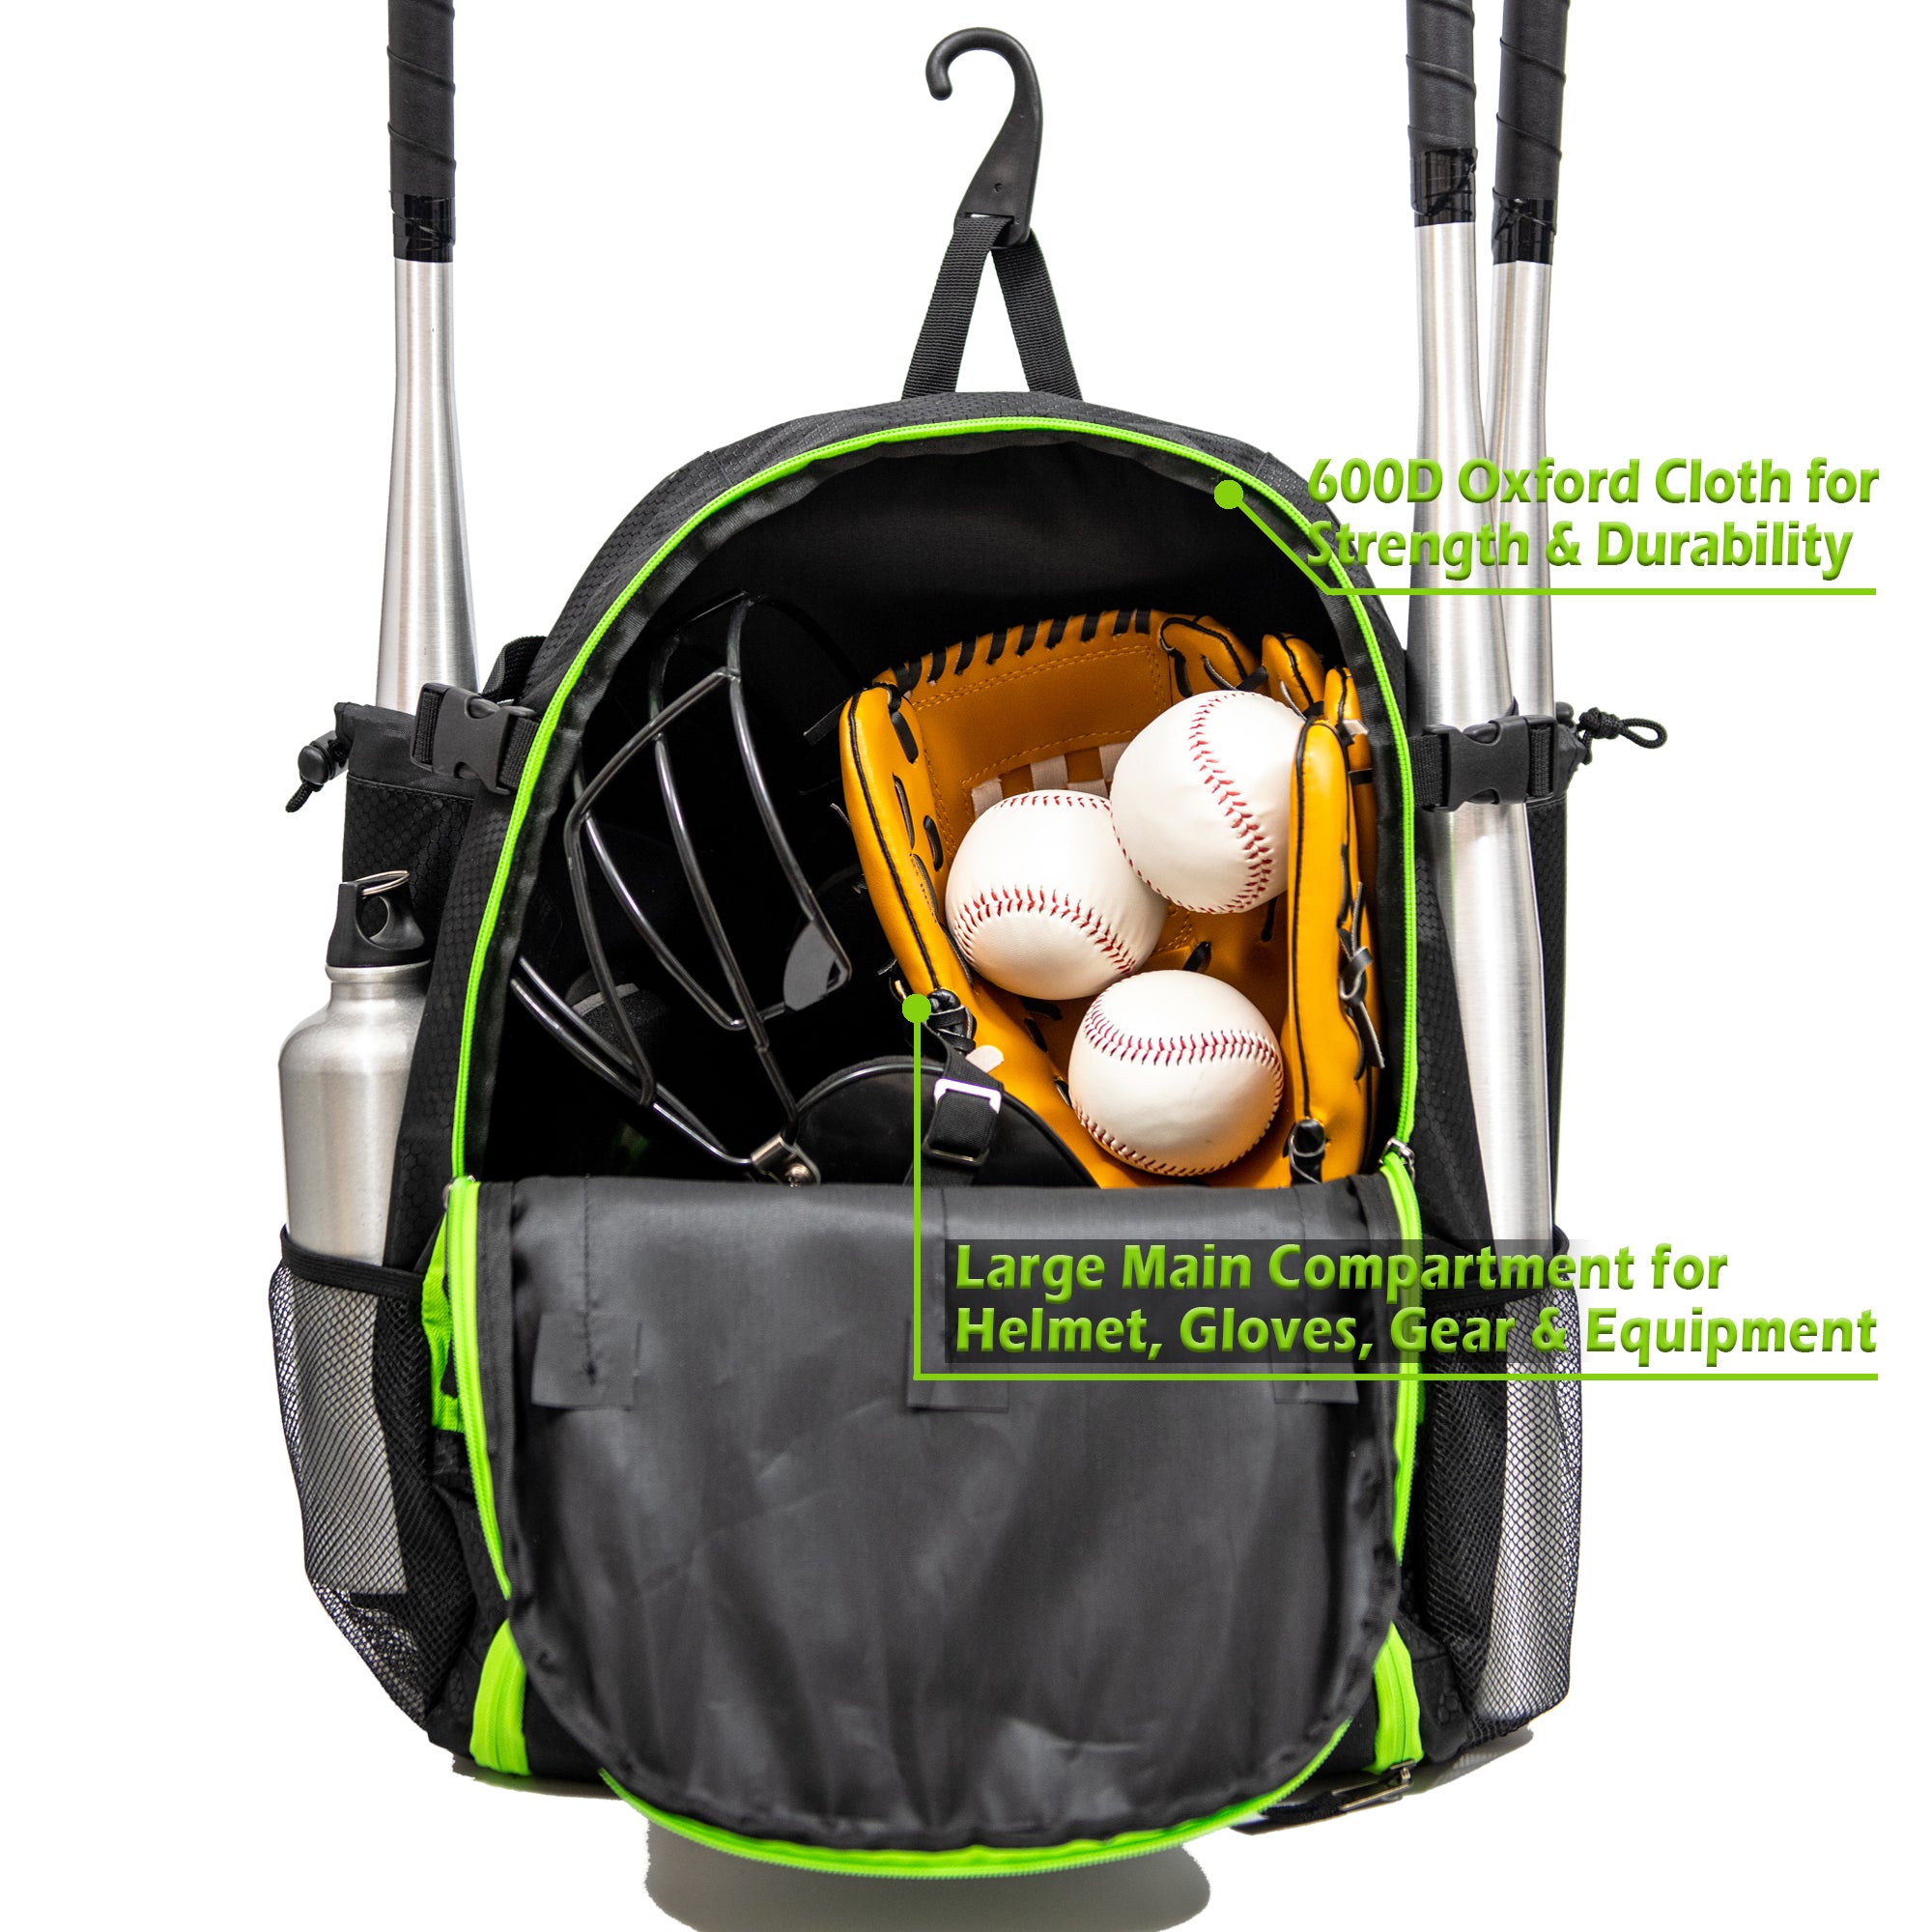 Ksports Baseball Backpack Black with Green Zipper (KSU6003)